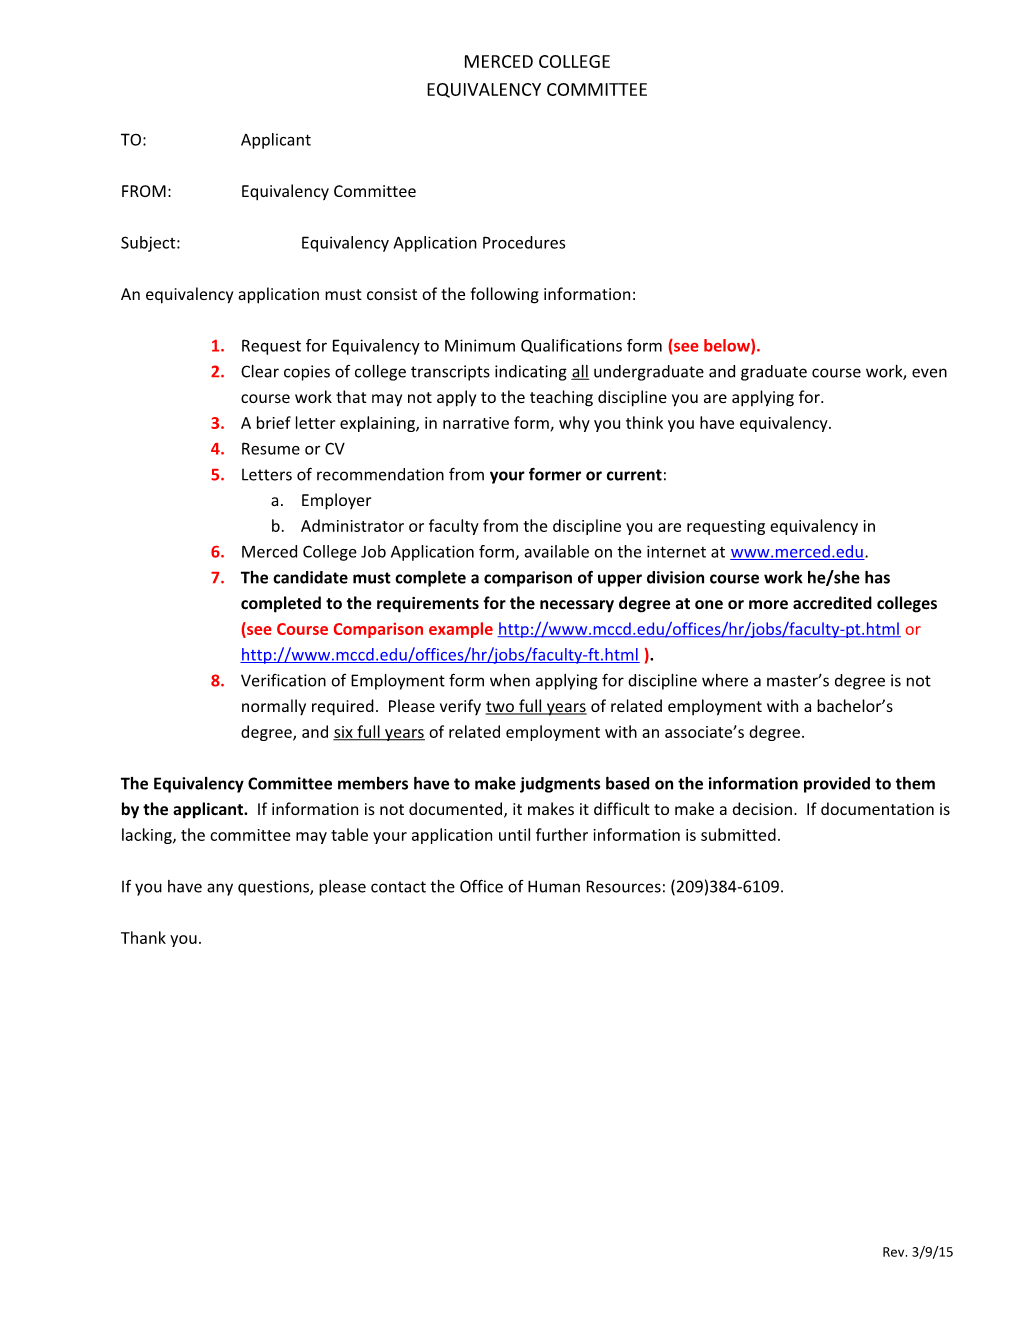 Subject:Equivalency Application Procedures